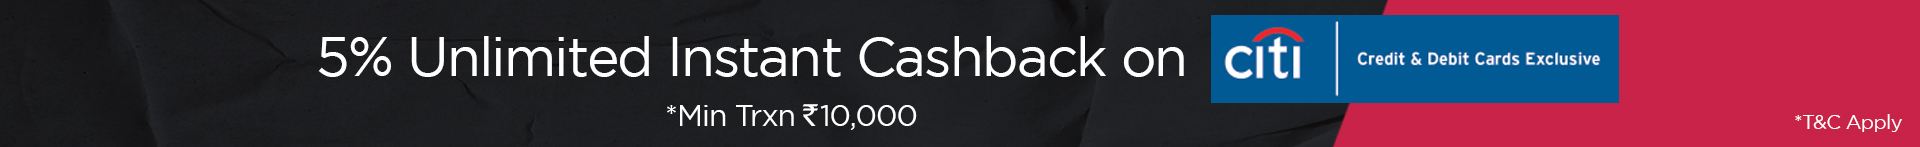 5% Unlimited Instant Cashback